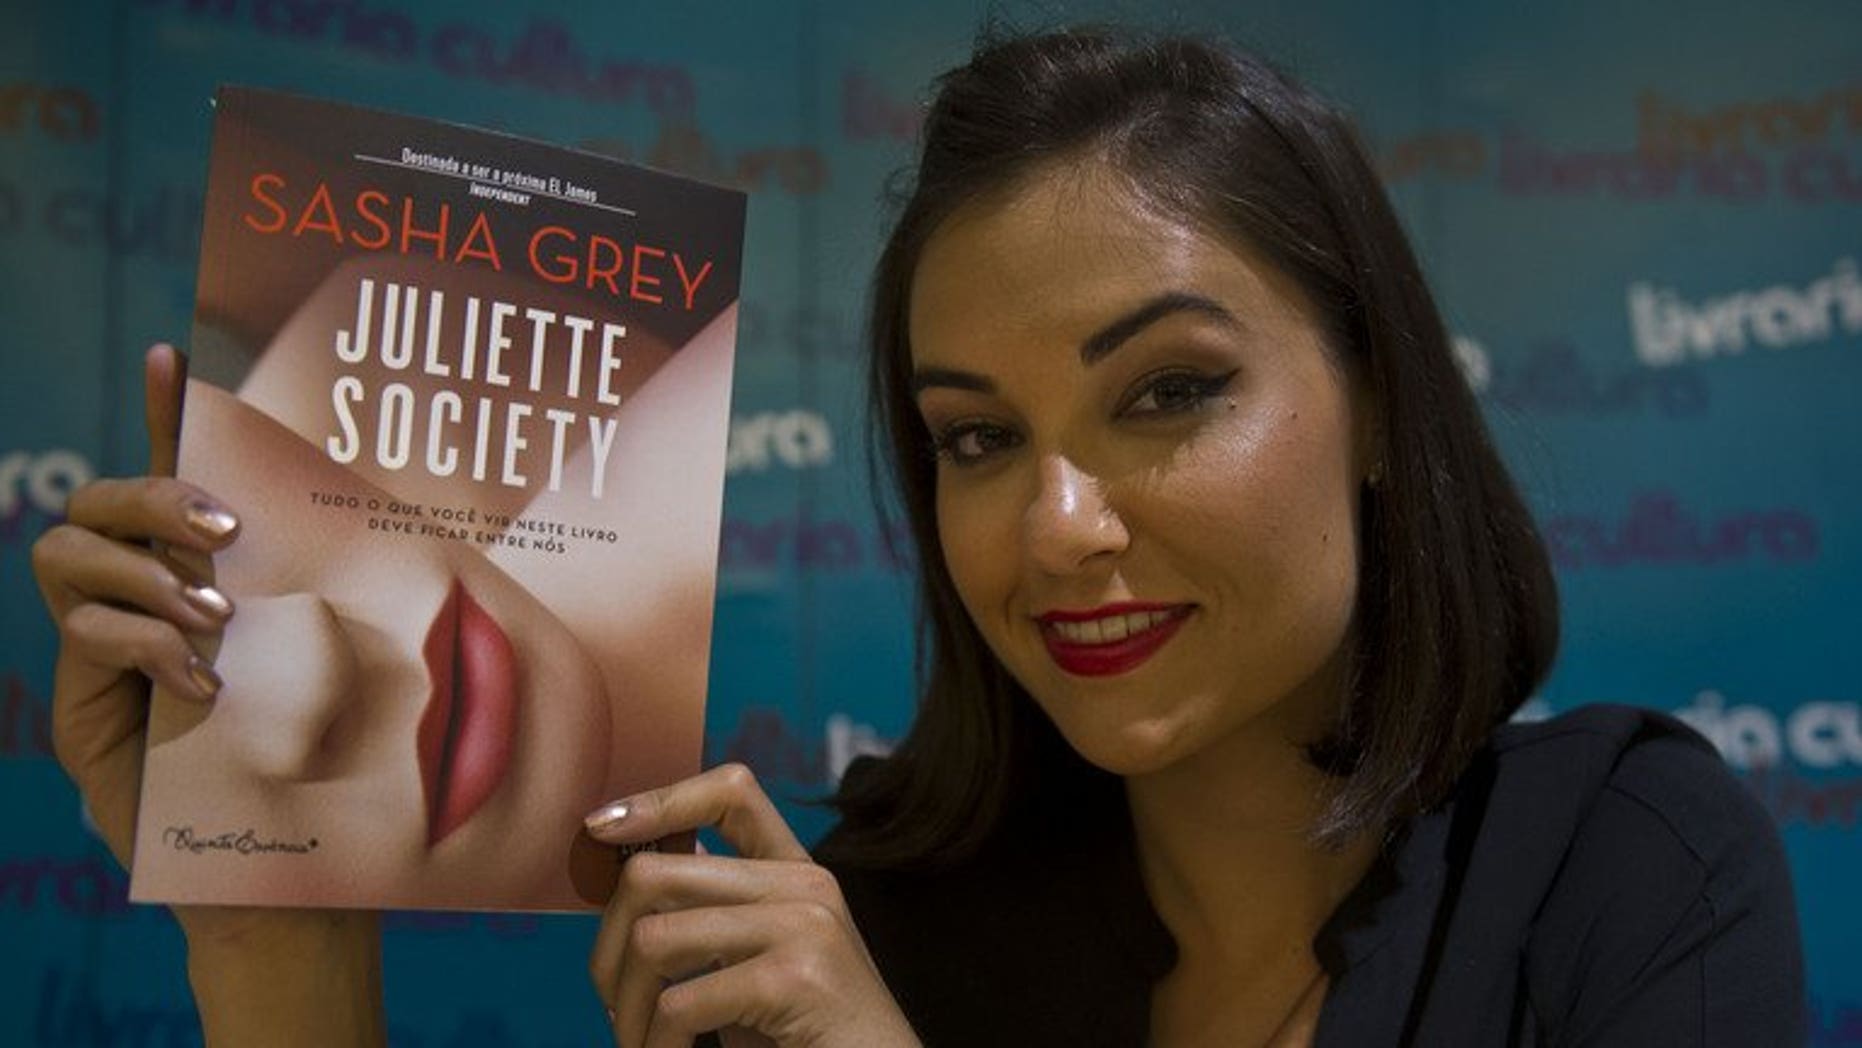 Brazilian Female Porn Stars Women - US ex-porn star in Brazil to promote new erotic book | Fox News